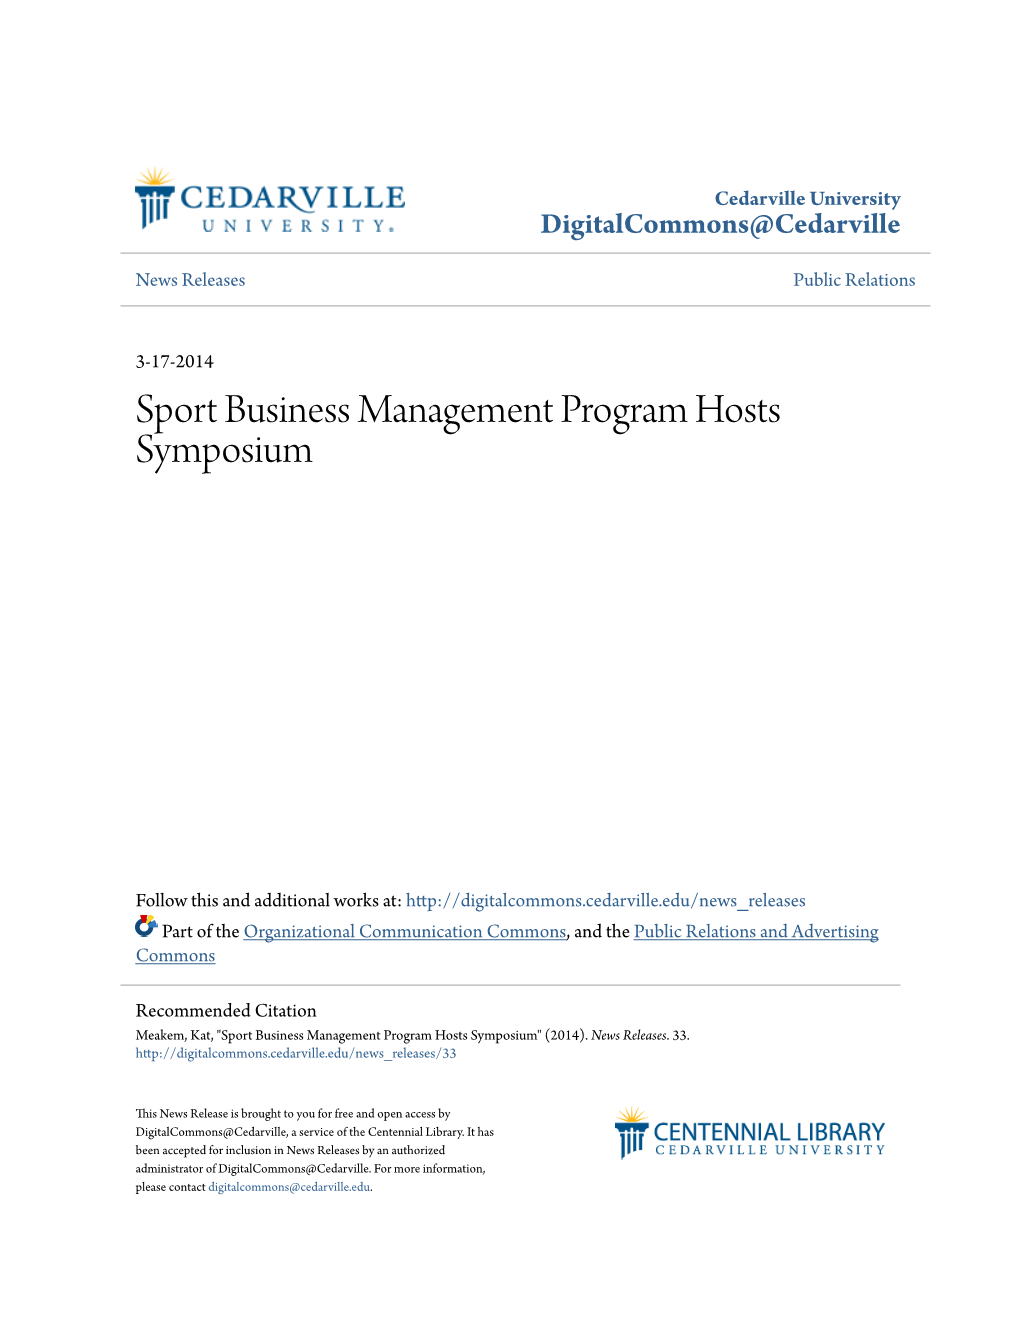 Sport Business Management Program Hosts Symposium